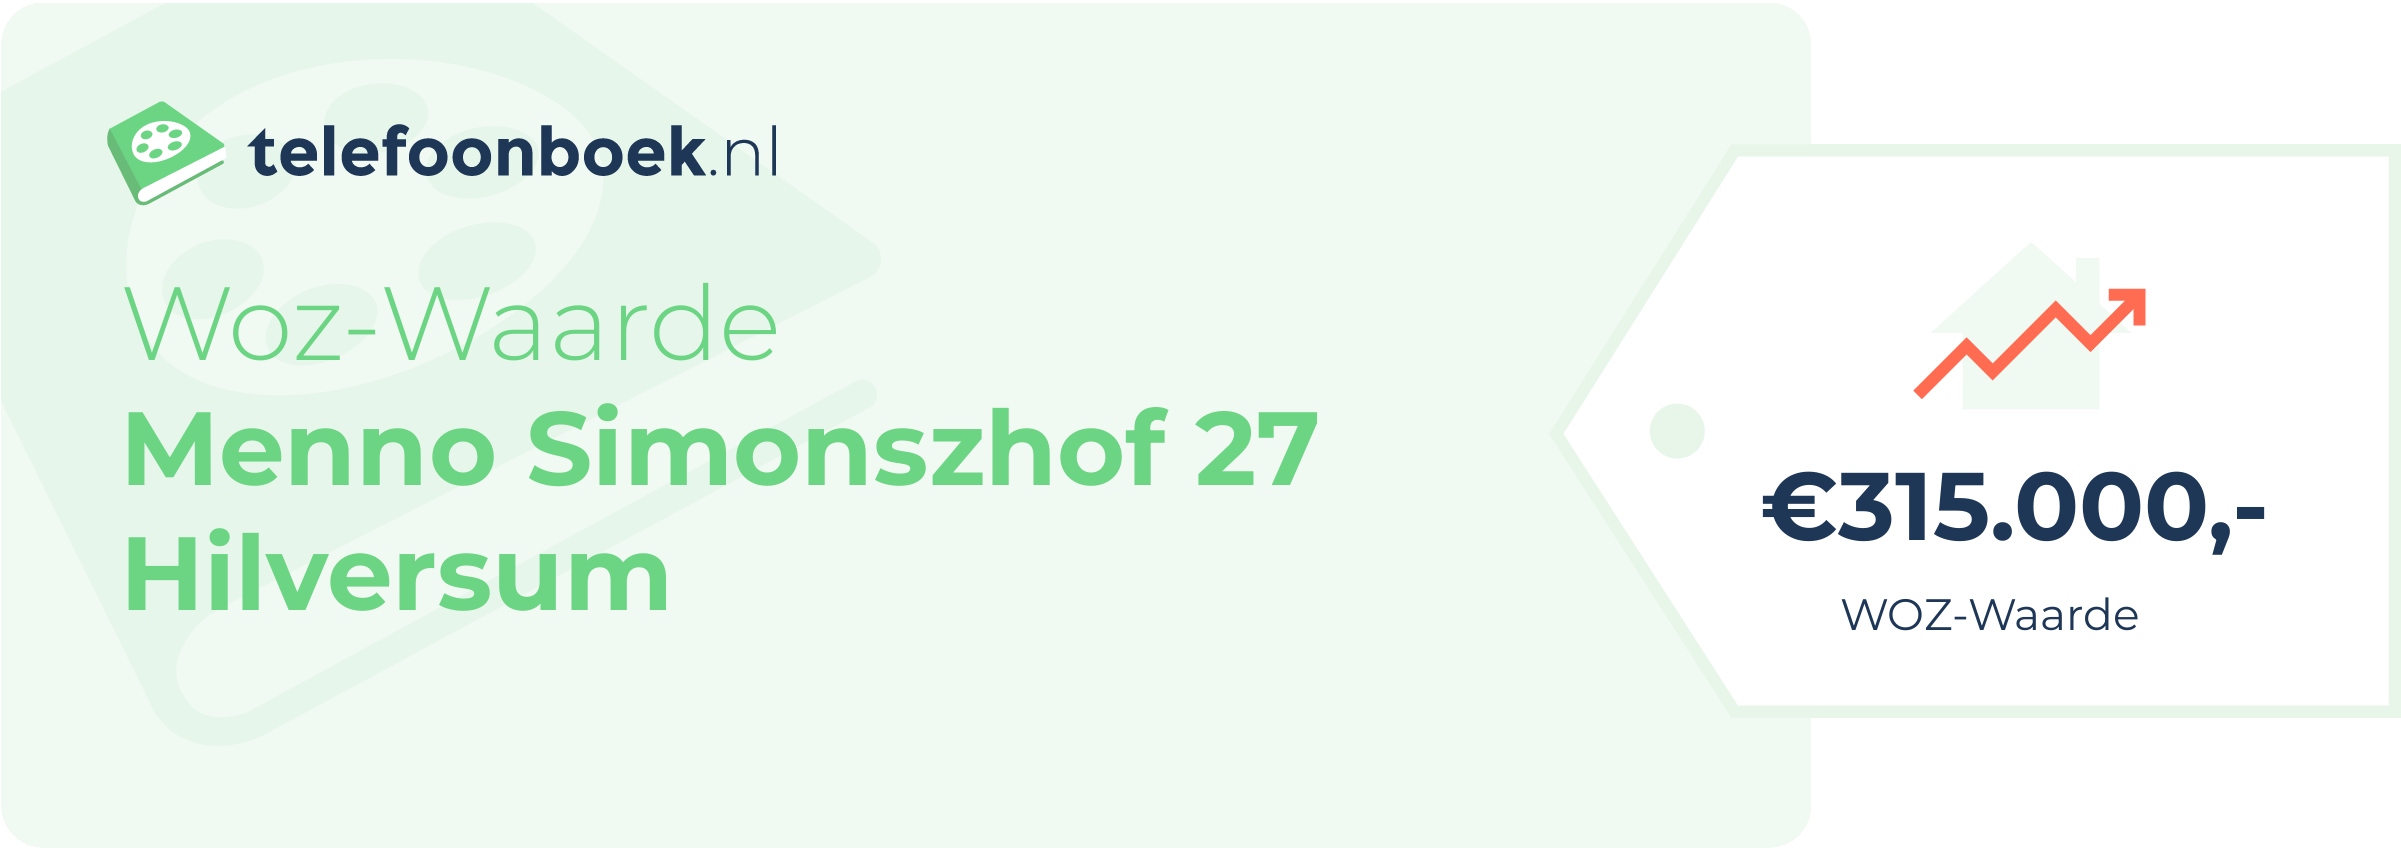 WOZ-waarde Menno Simonszhof 27 Hilversum